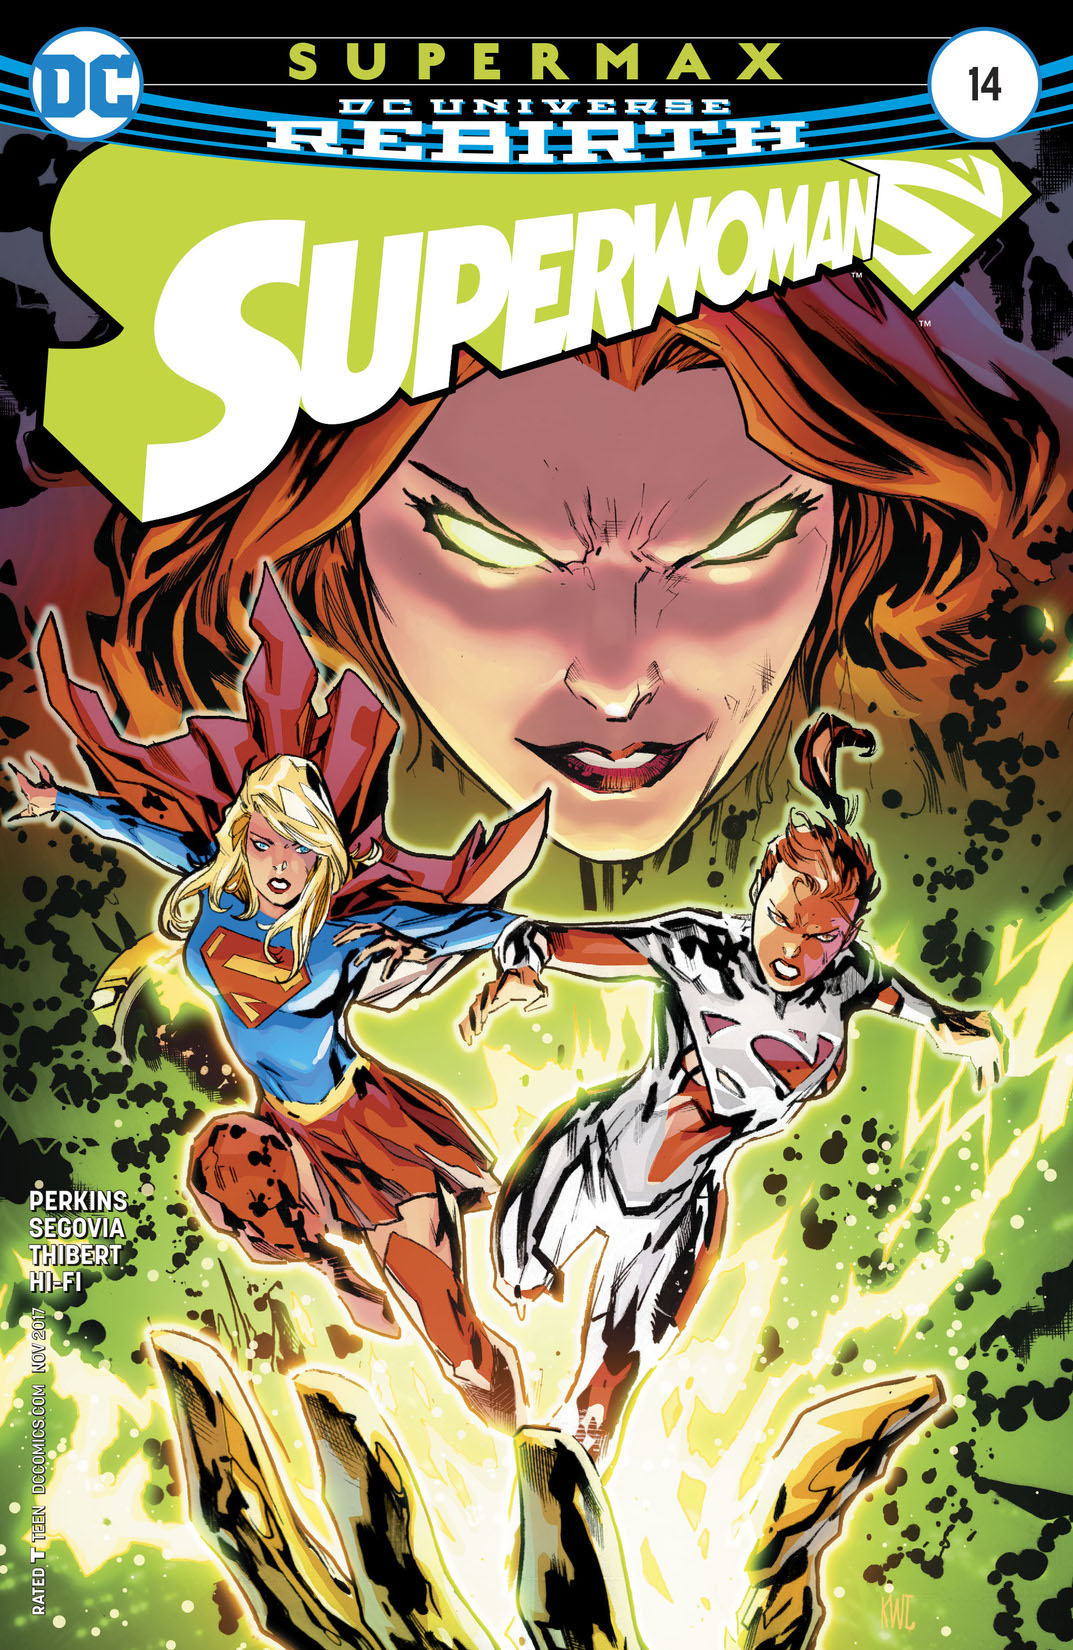 Superwoman #14 preview images